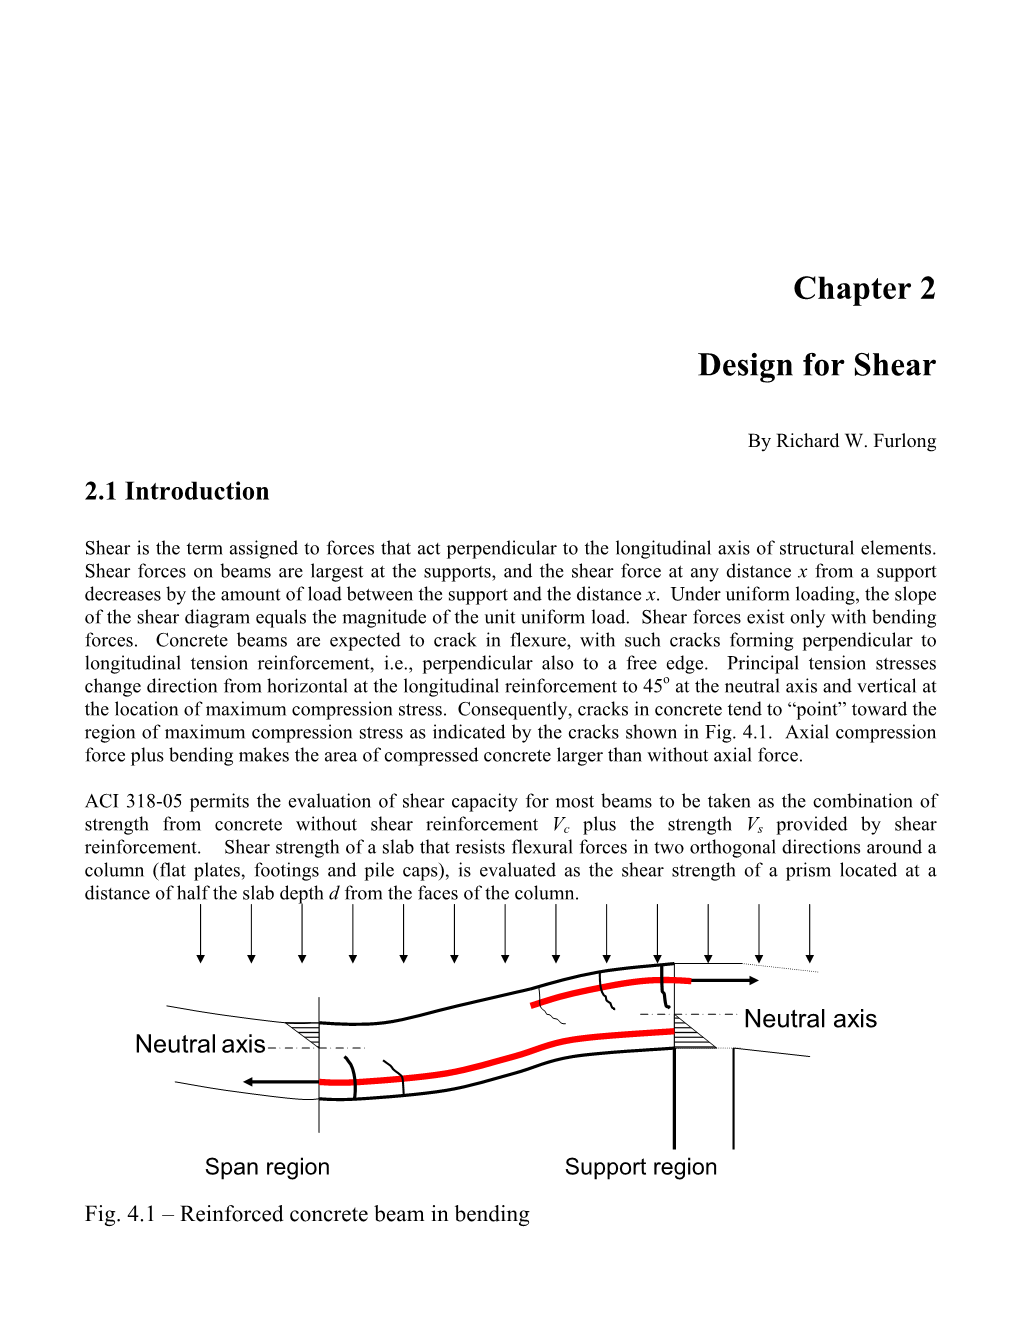 Chapter 2 Design for Shear